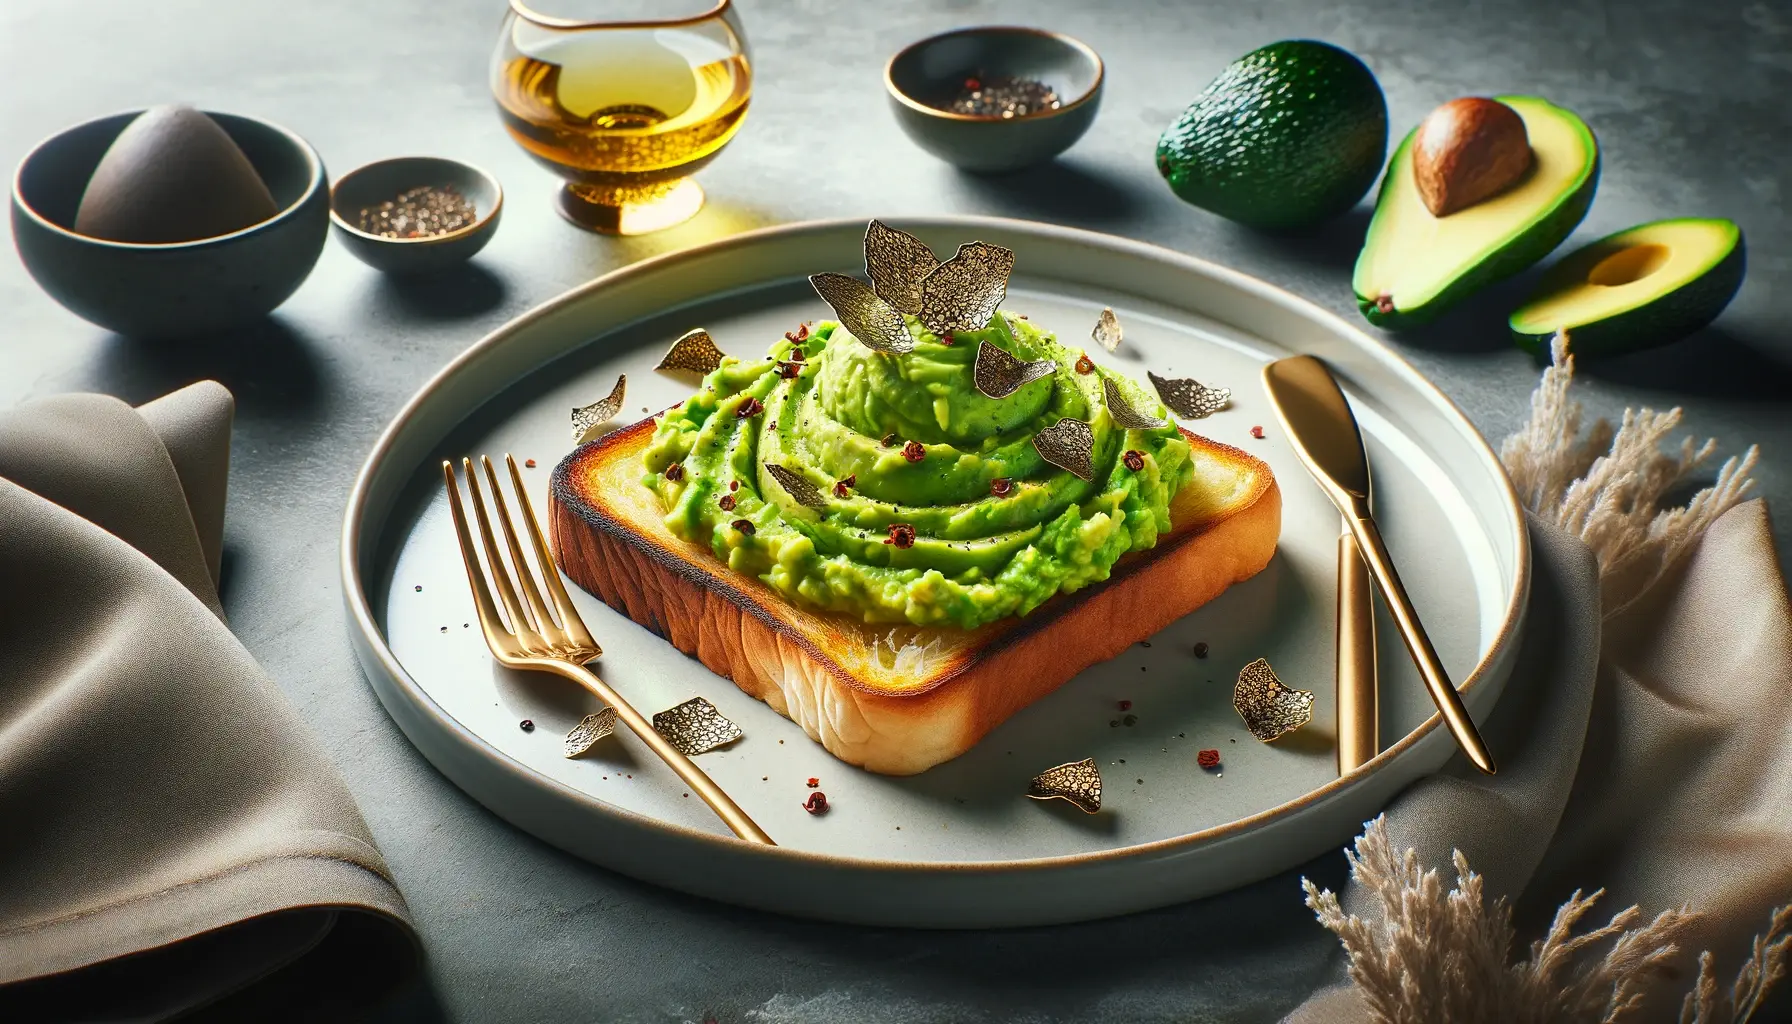 Applause-worthy Avocado Toast: A Lady Gaga-Inspired Culinary Creation By AI